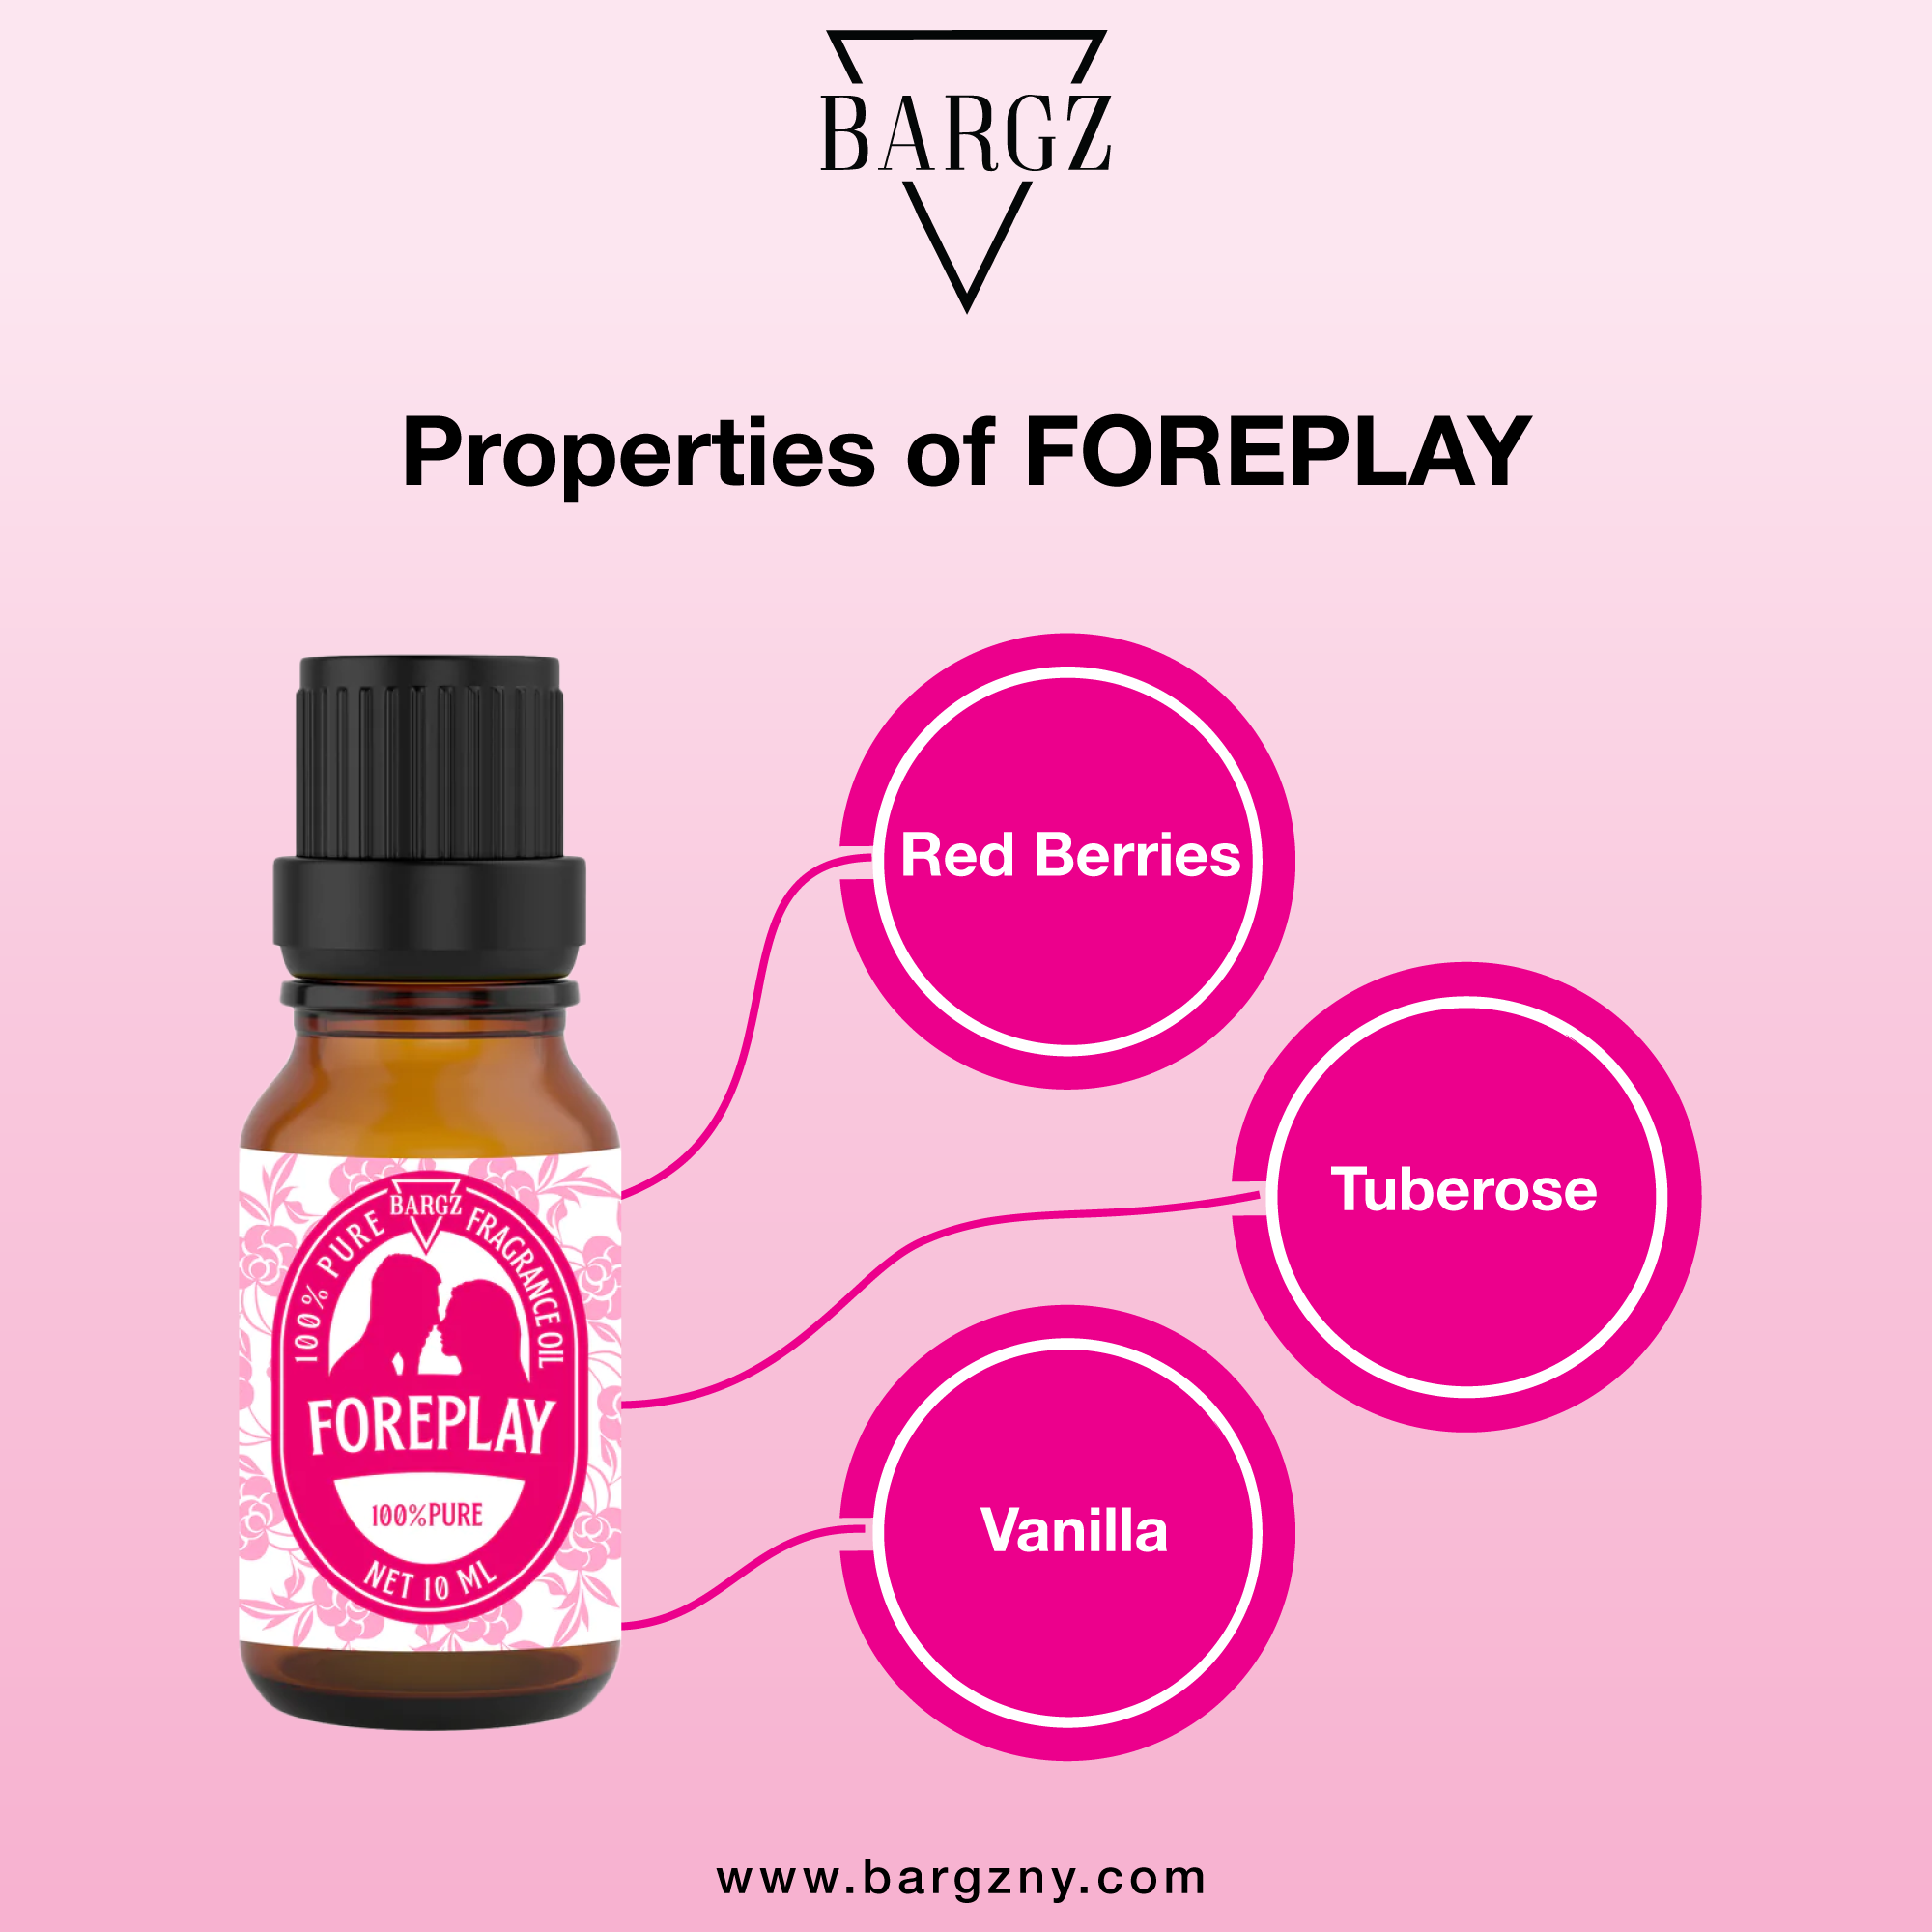 Bargz Satisfied Fragrance Oil for Women - Premium Grade Perfume